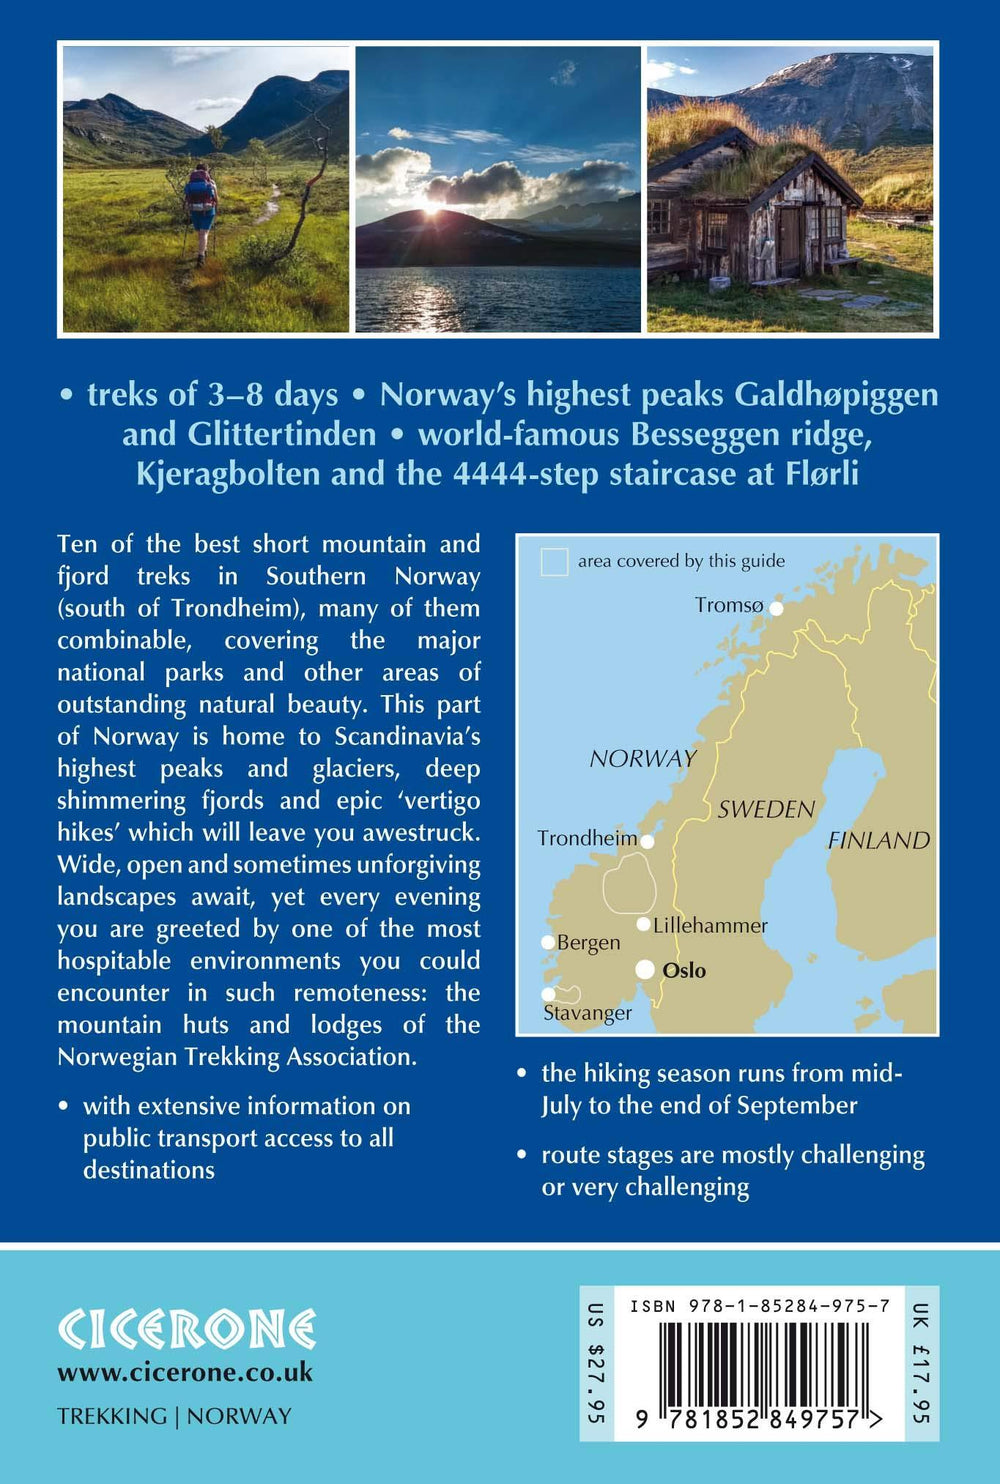 Guide de randonnées (en anglais) - Hiking in Norway - South | Cicerone guide de randonnée Cicerone 